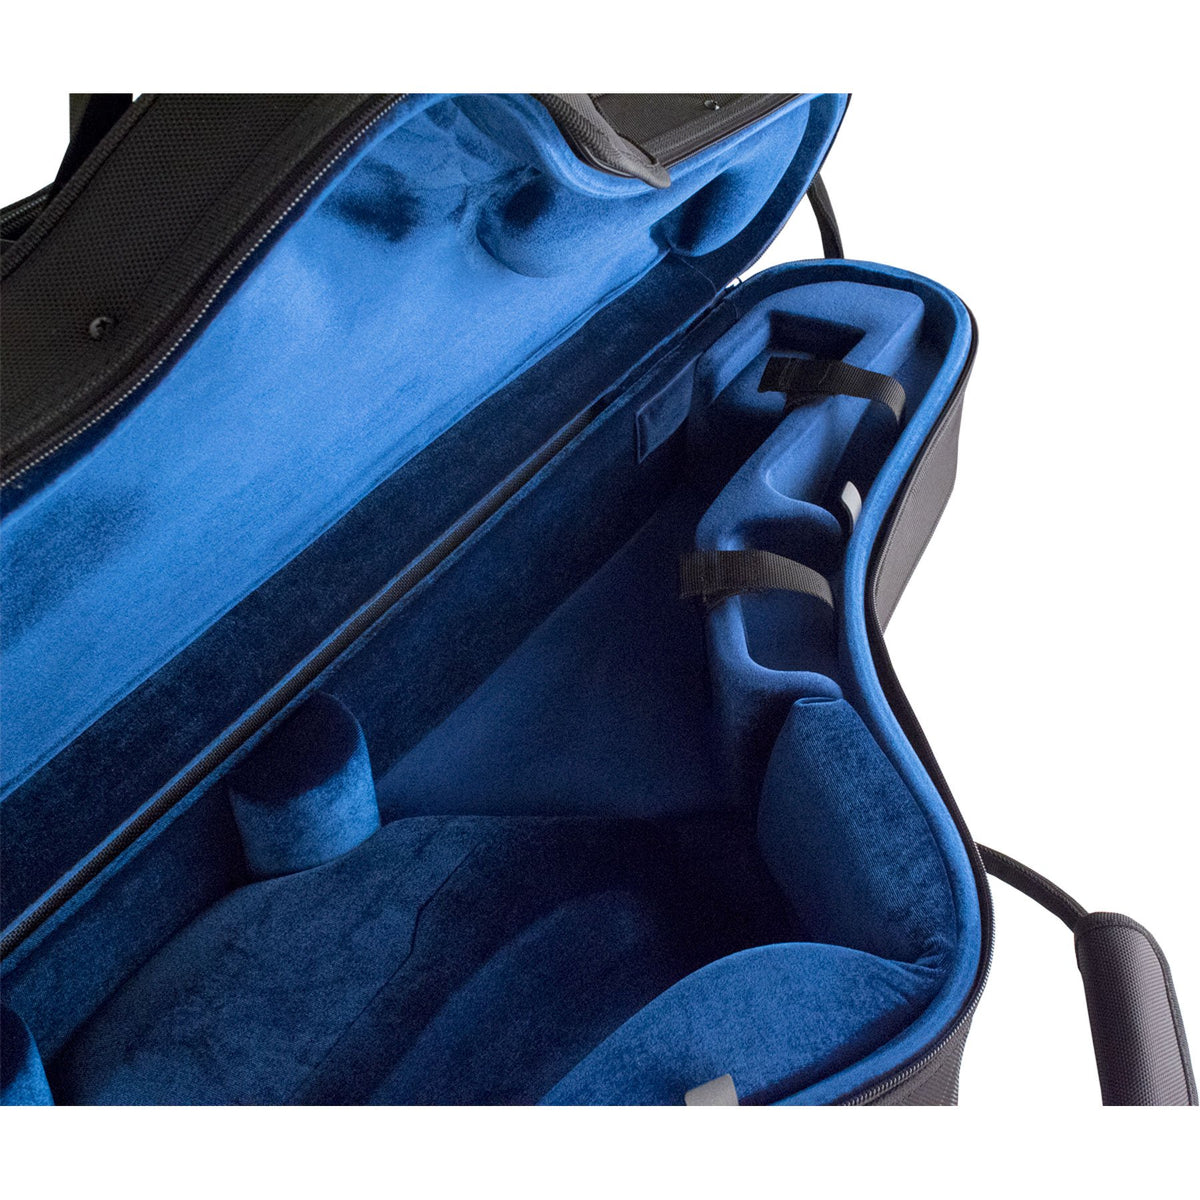 Protec - Tenor Saxophone PRO PAC Case XL (Contoured)-Accessories-Protec-Music Elements